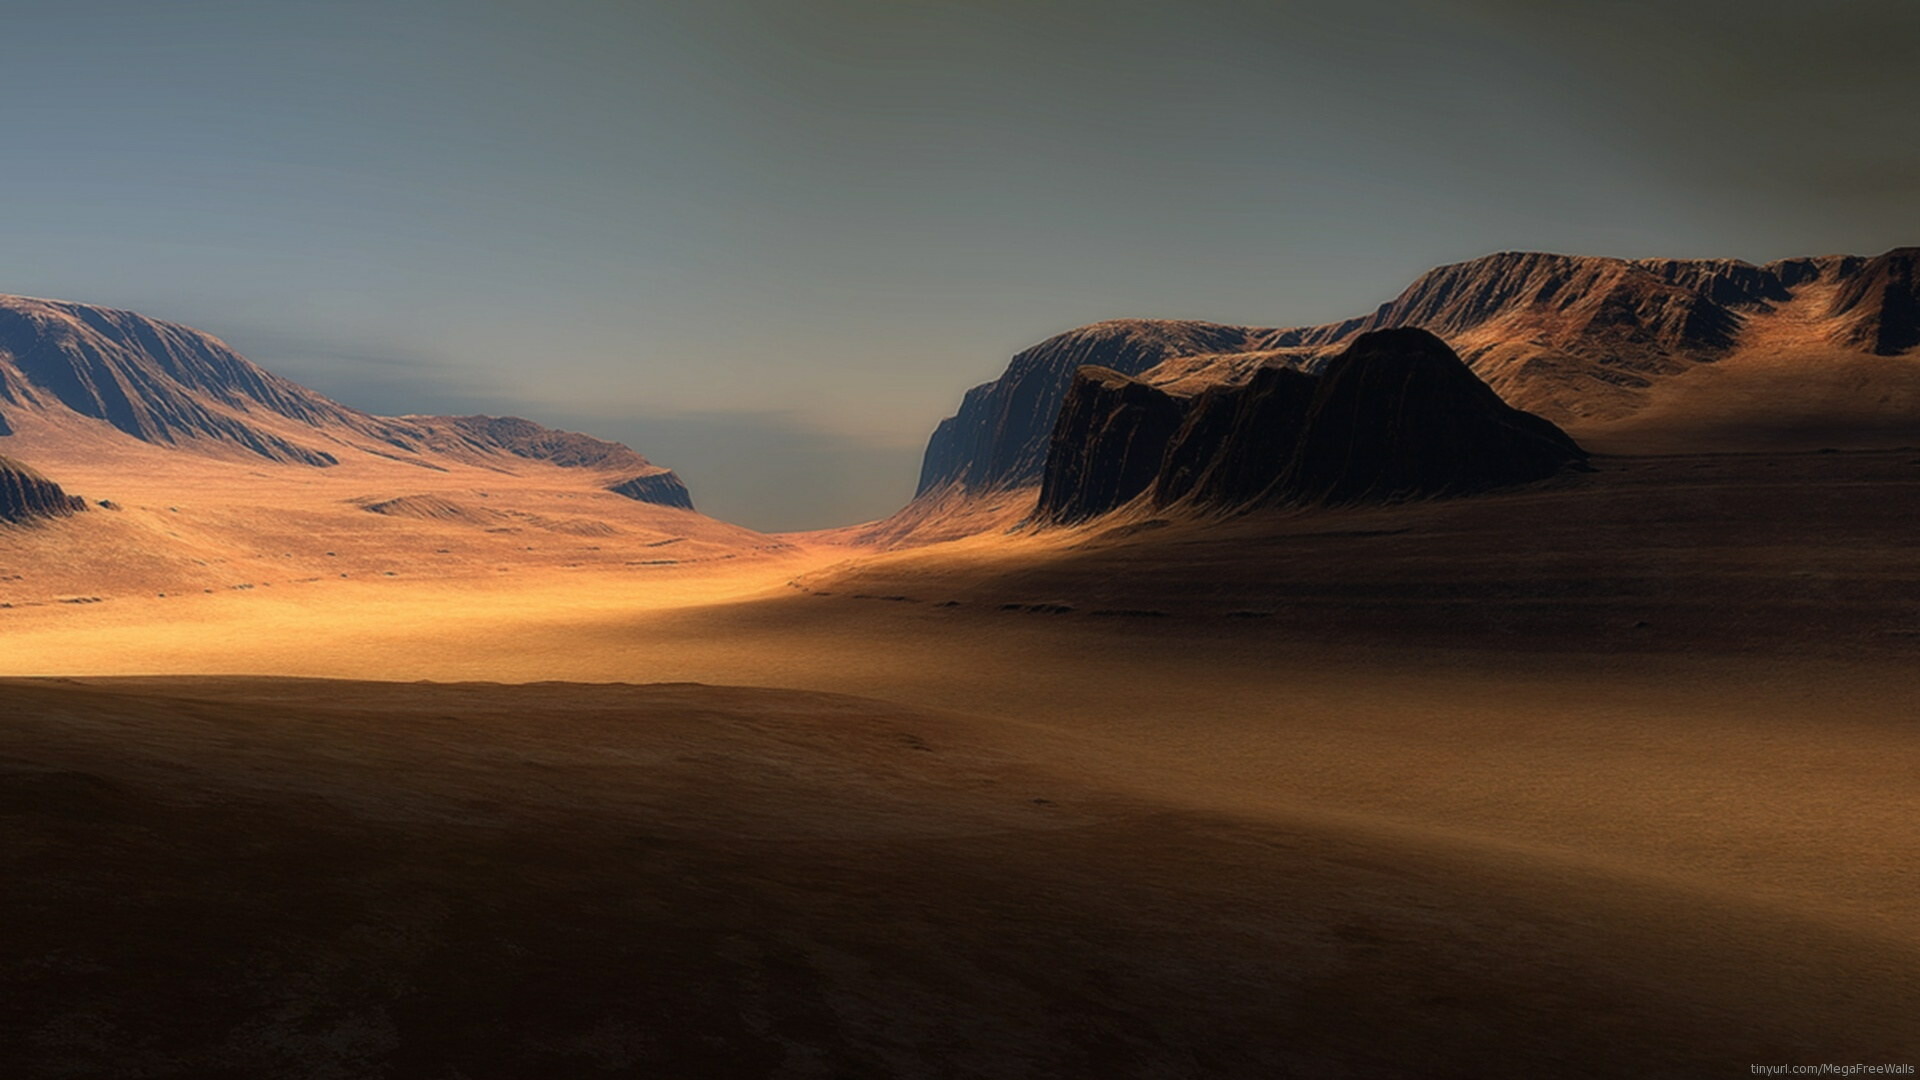 Desert: A barren and empty landscape, Highland. 1920x1080 Full HD Background.